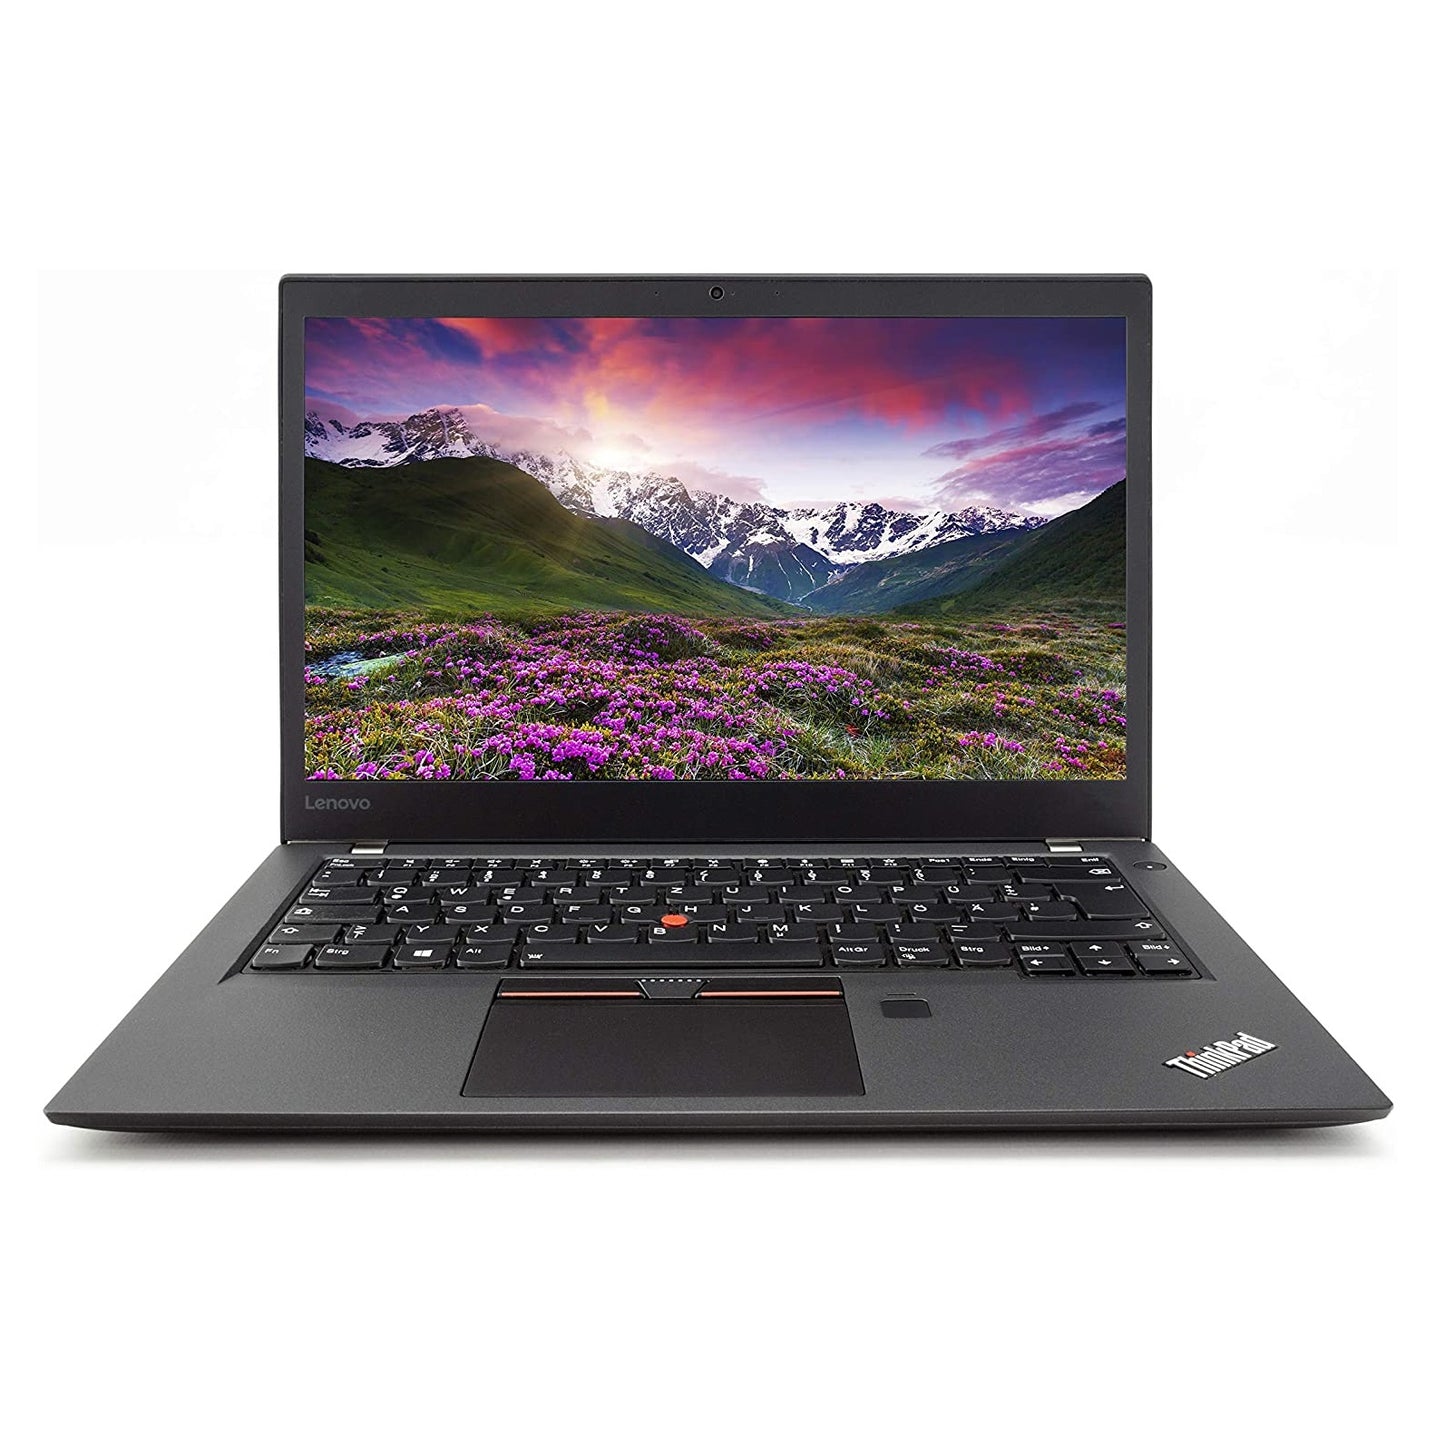 Lenovo ThinkPad TSeries Pro VII 14 Pollici Intel i5 - RAM 8GB - CLASSE A+++